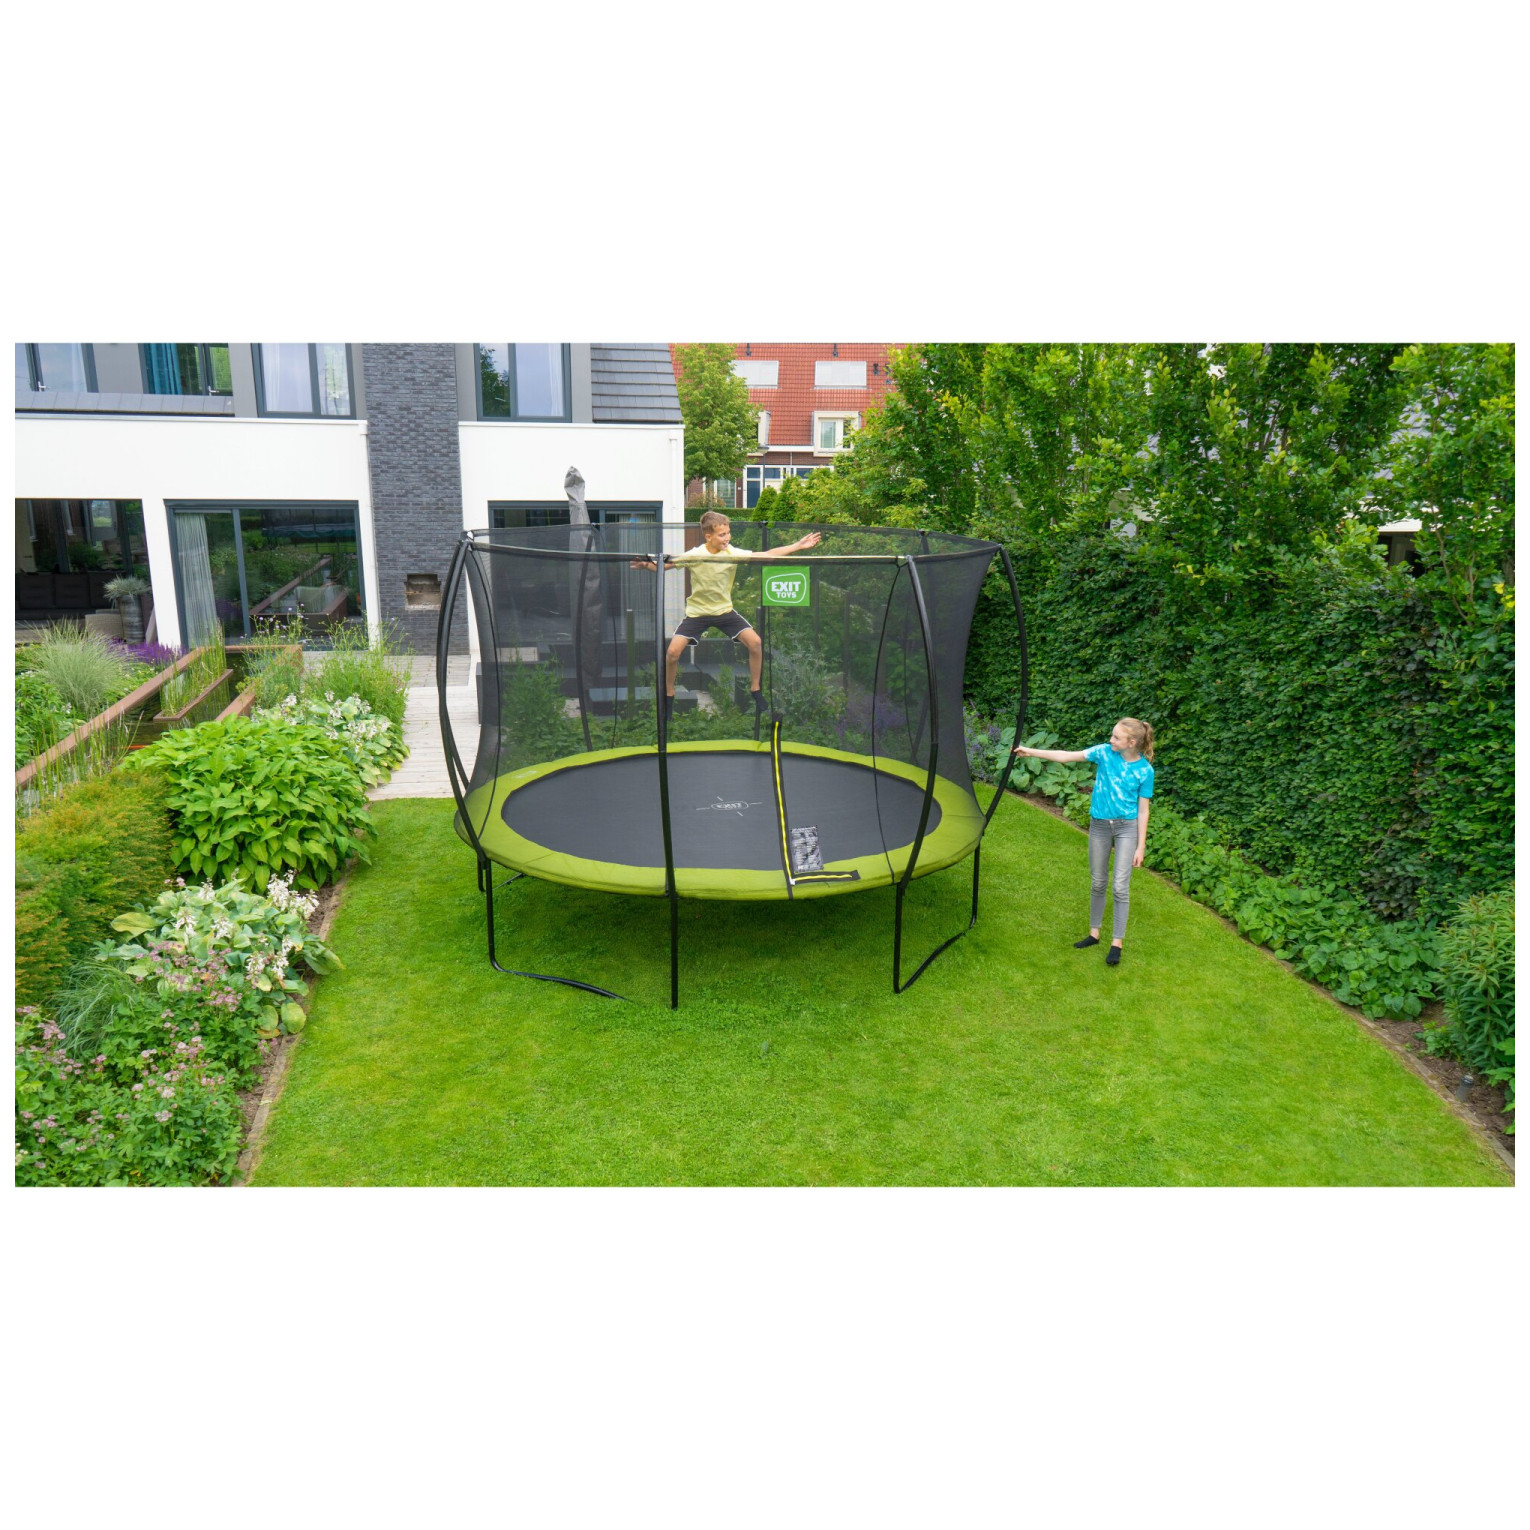 EXIT Silhouette trampoline ø366cm - groen